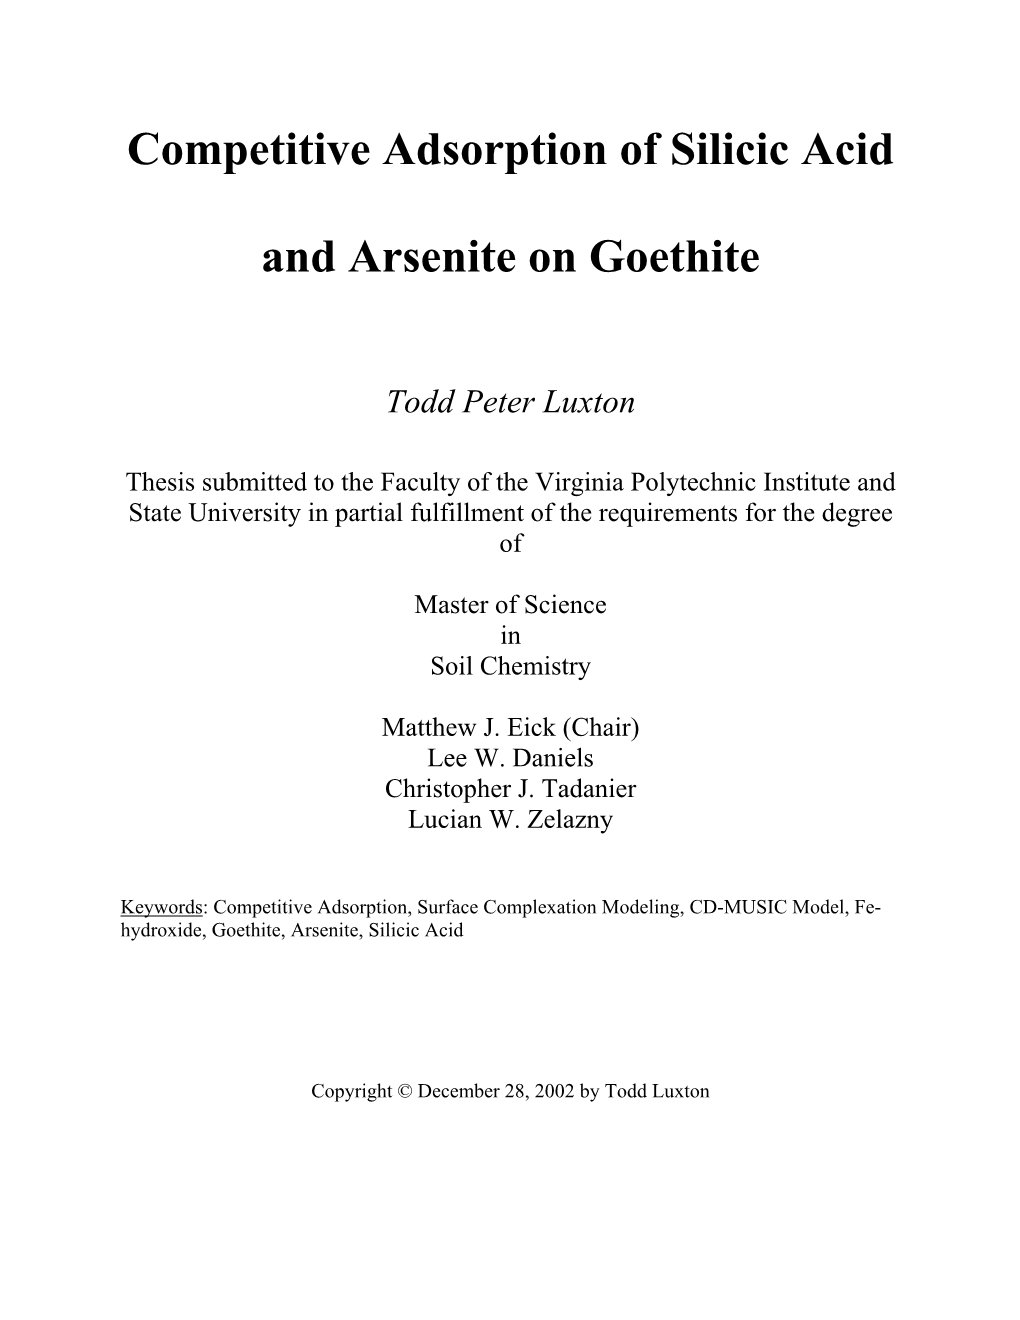 Competitive Adsorption of Silicic Acid and Arsenite on Goethite